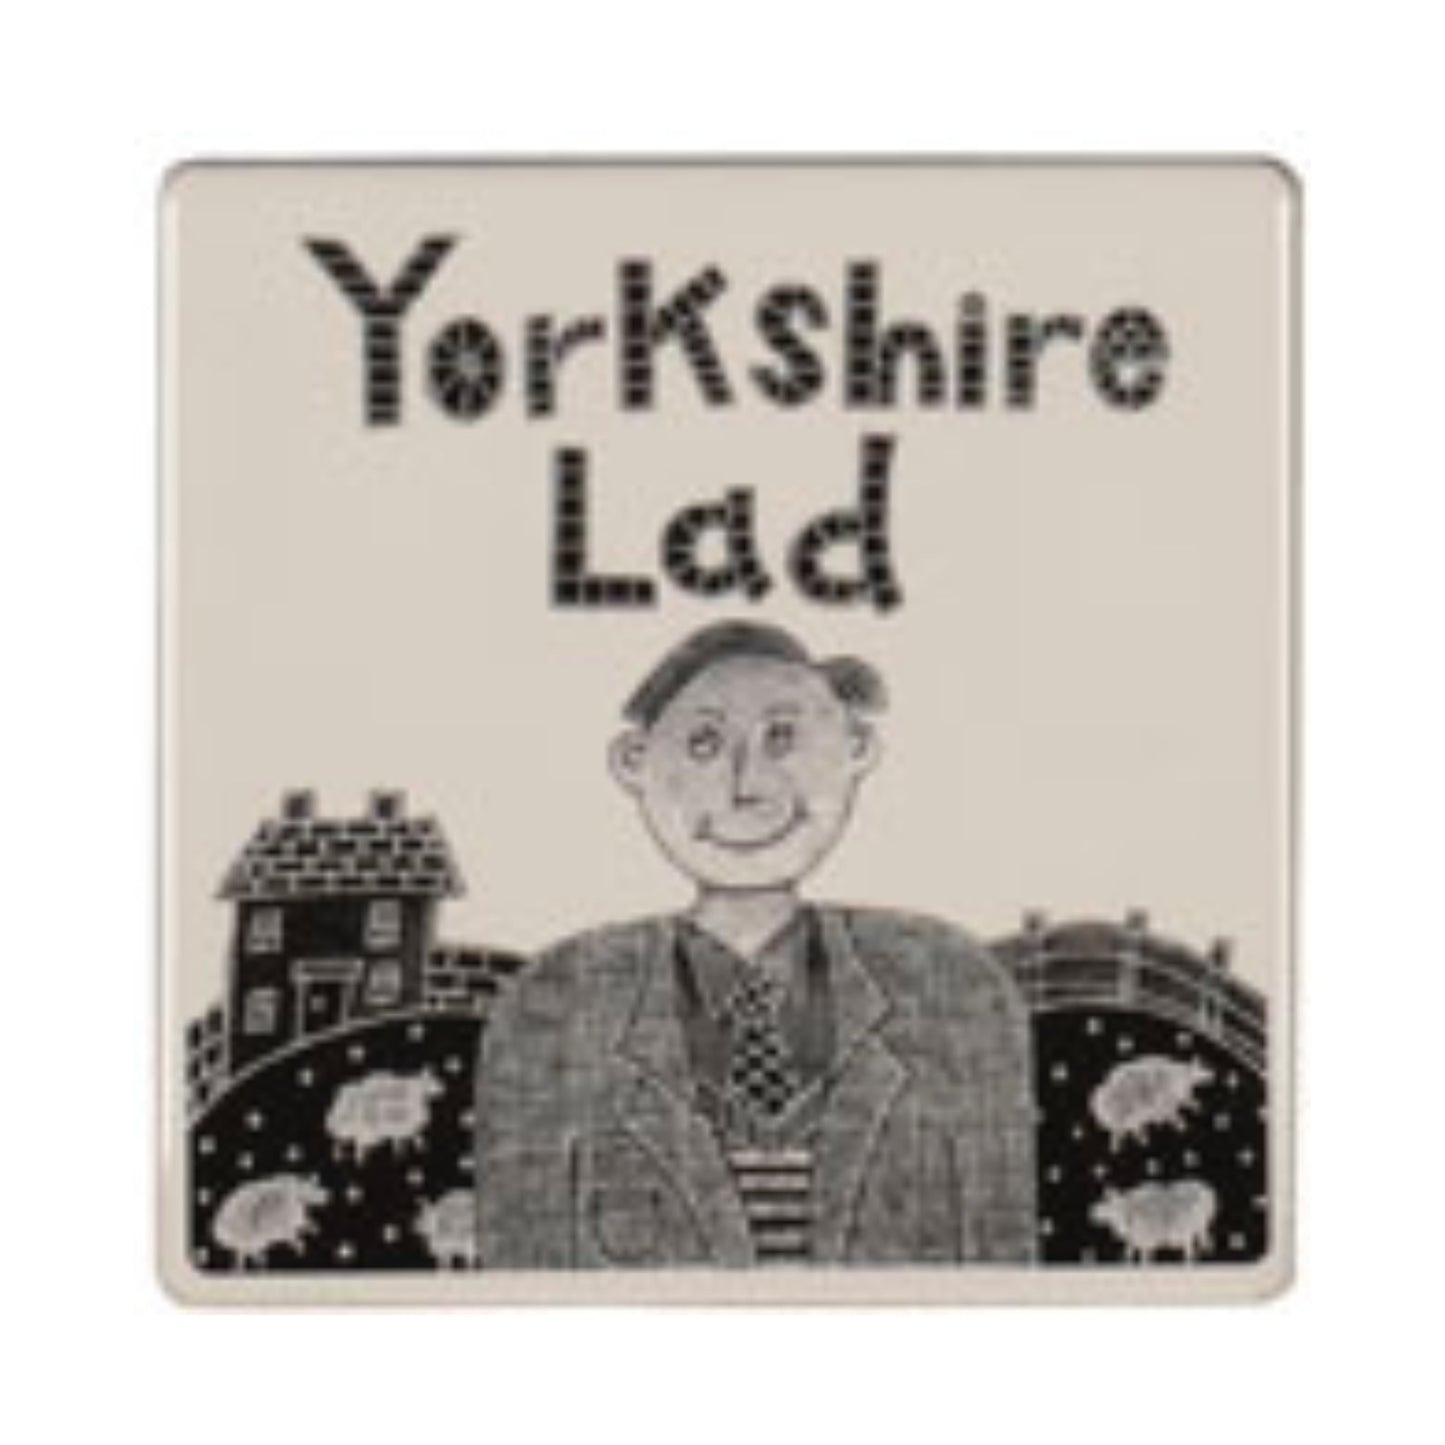 Yorkshire Lad Ceramic Coaster - The Great Yorkshire Shop